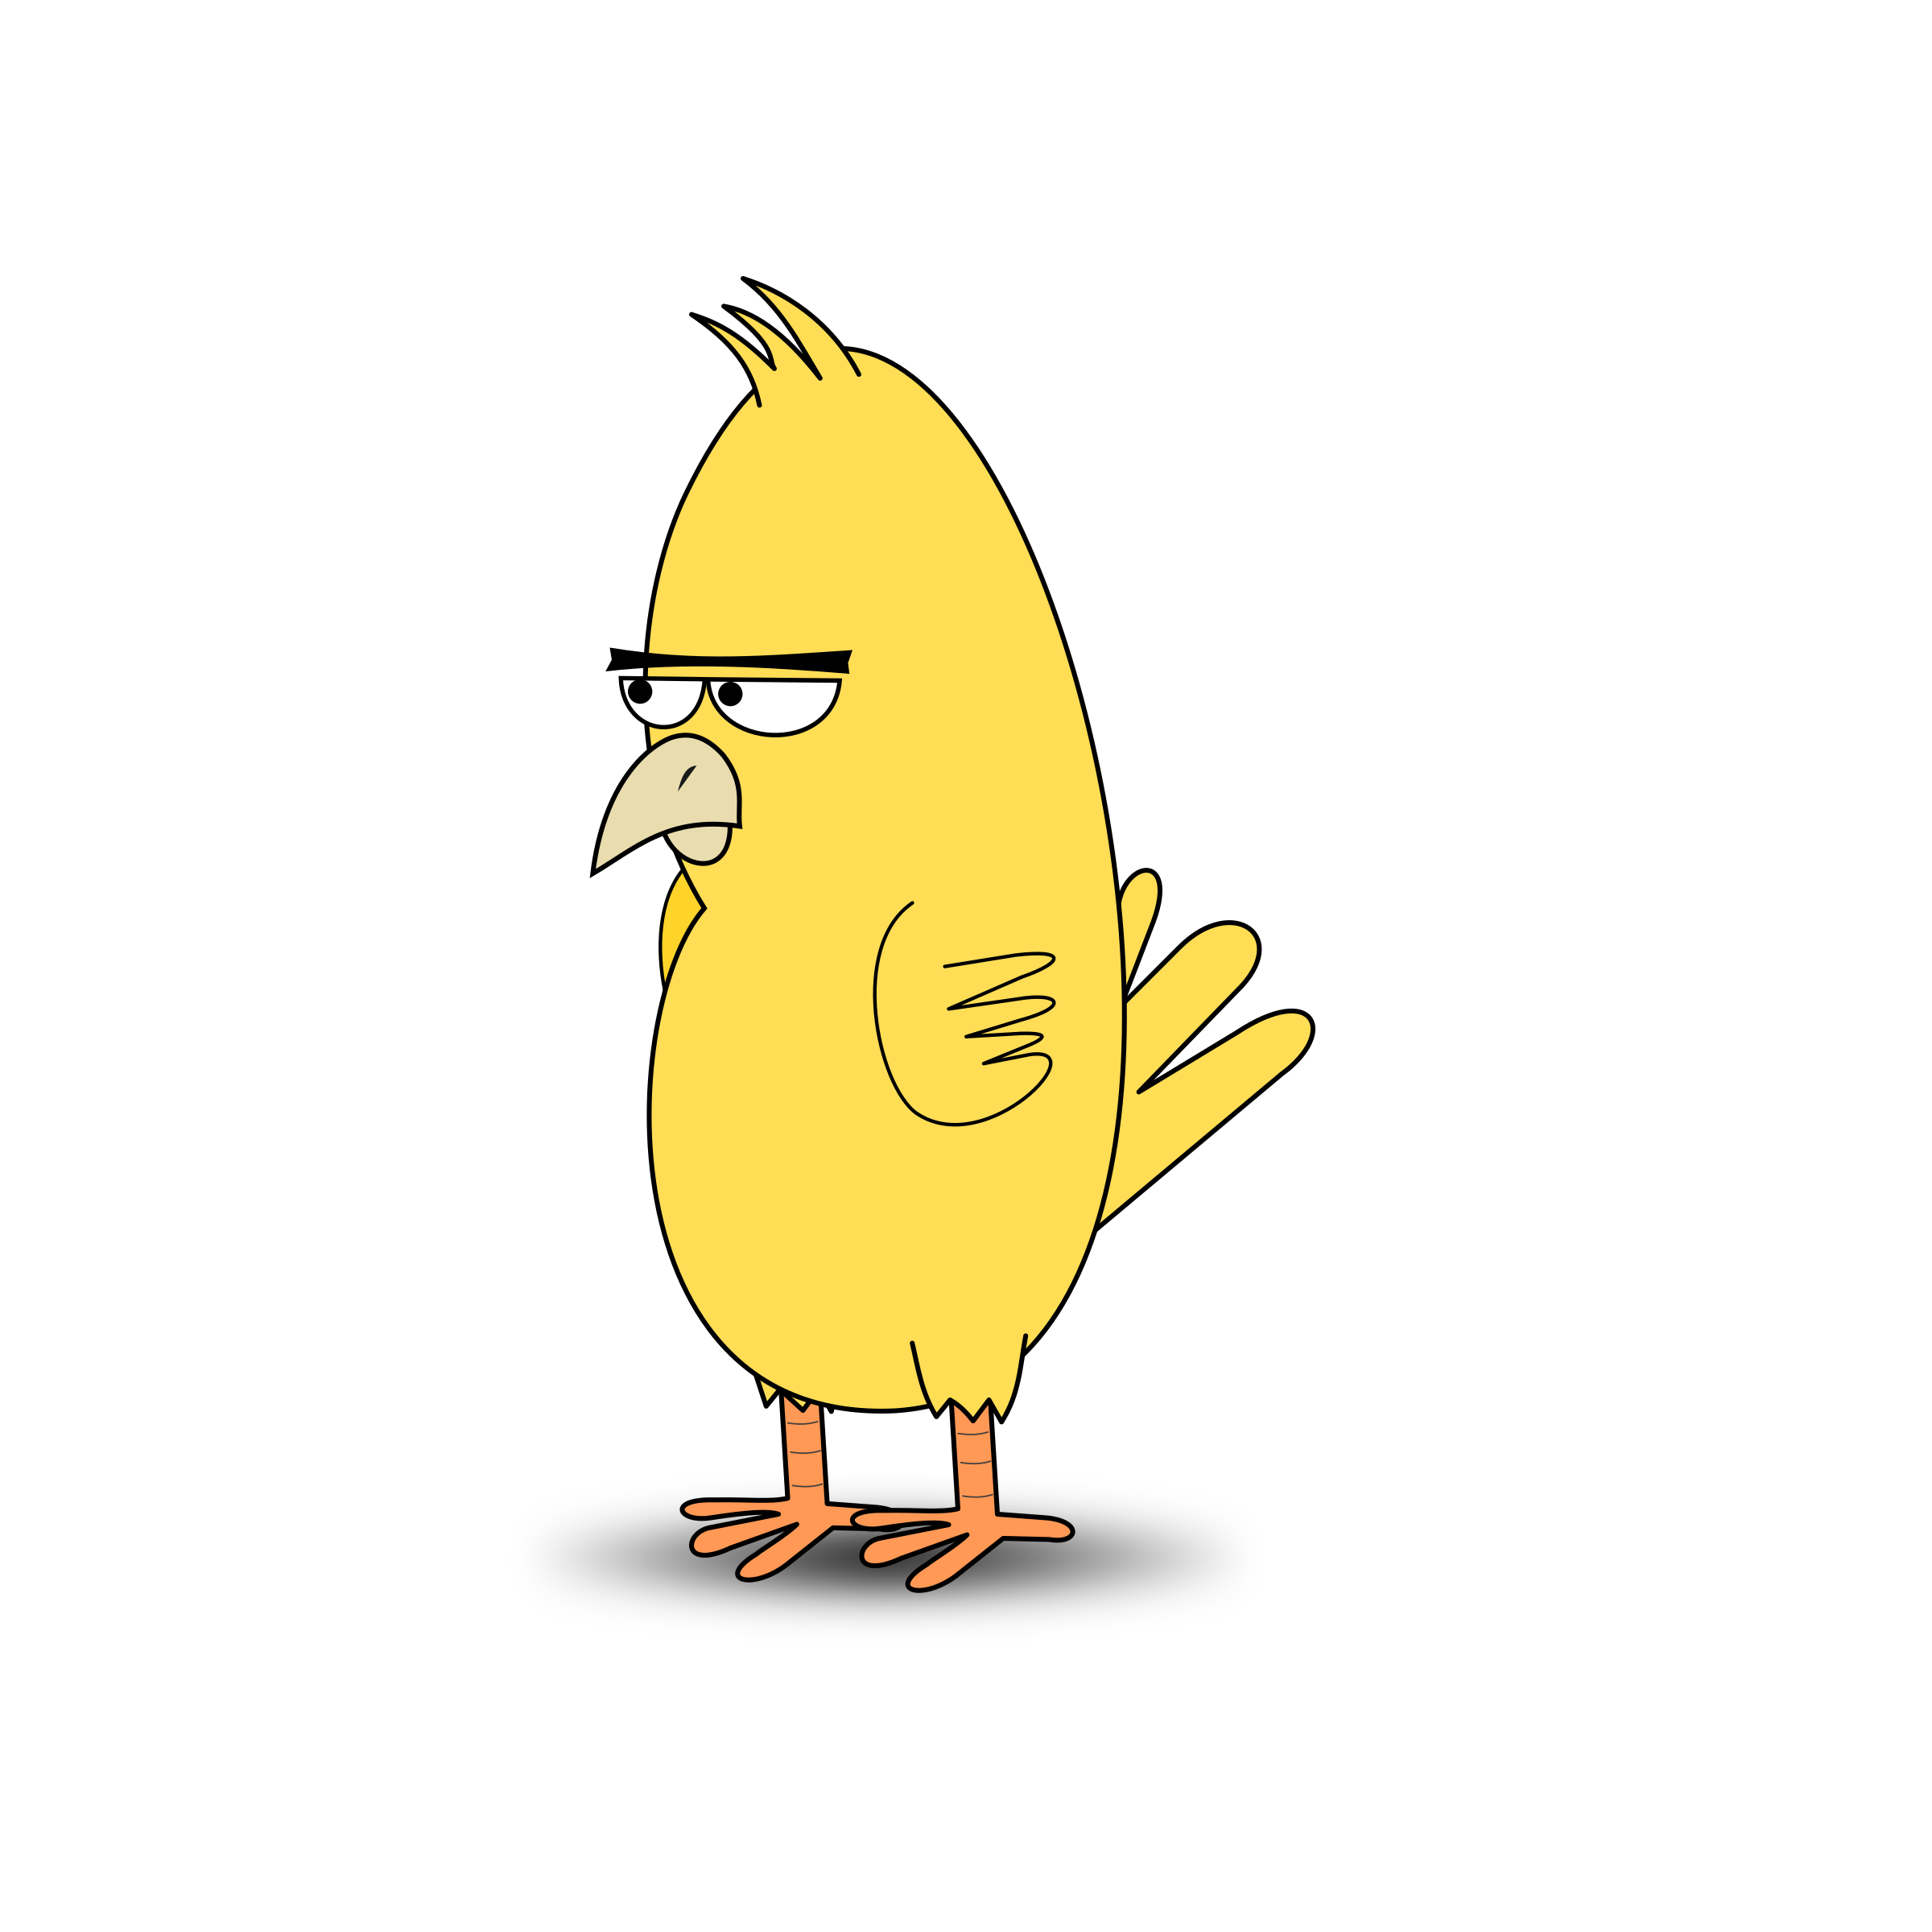 Mad clipart chicken. Bird pajaro big image